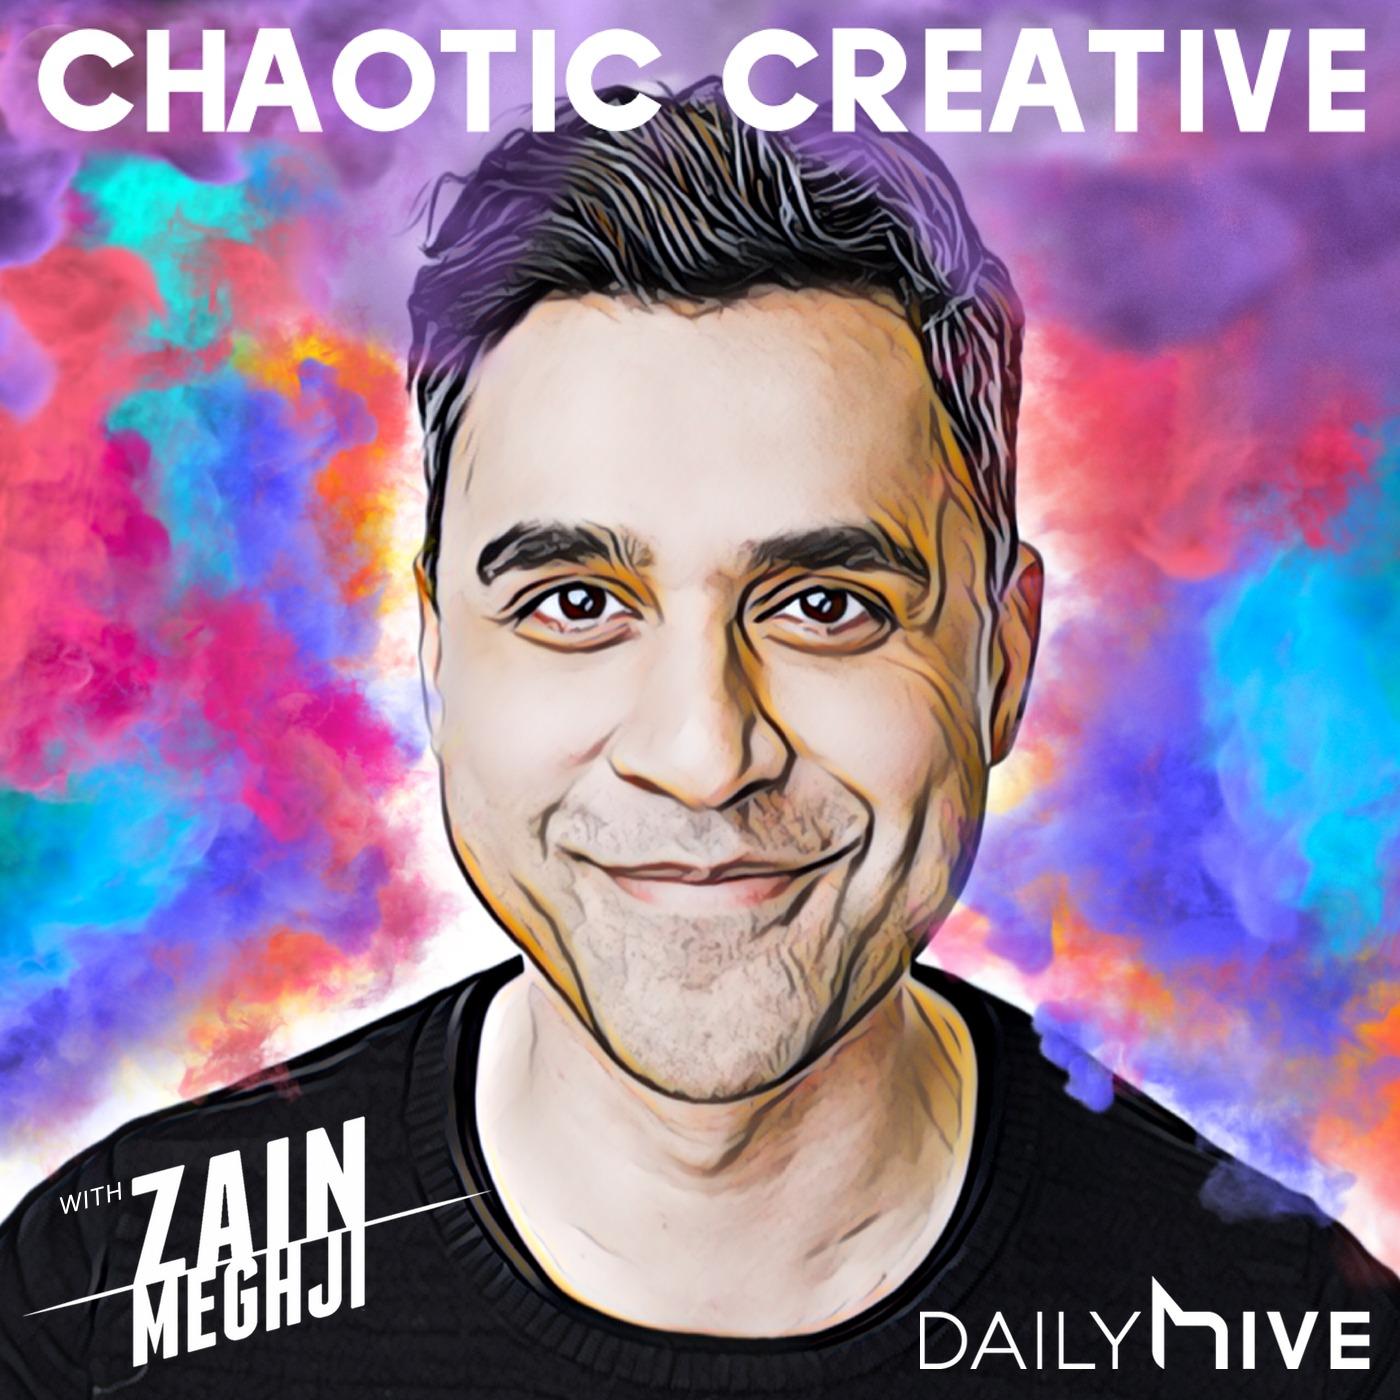 Chaotic Creative with Zain Meghji